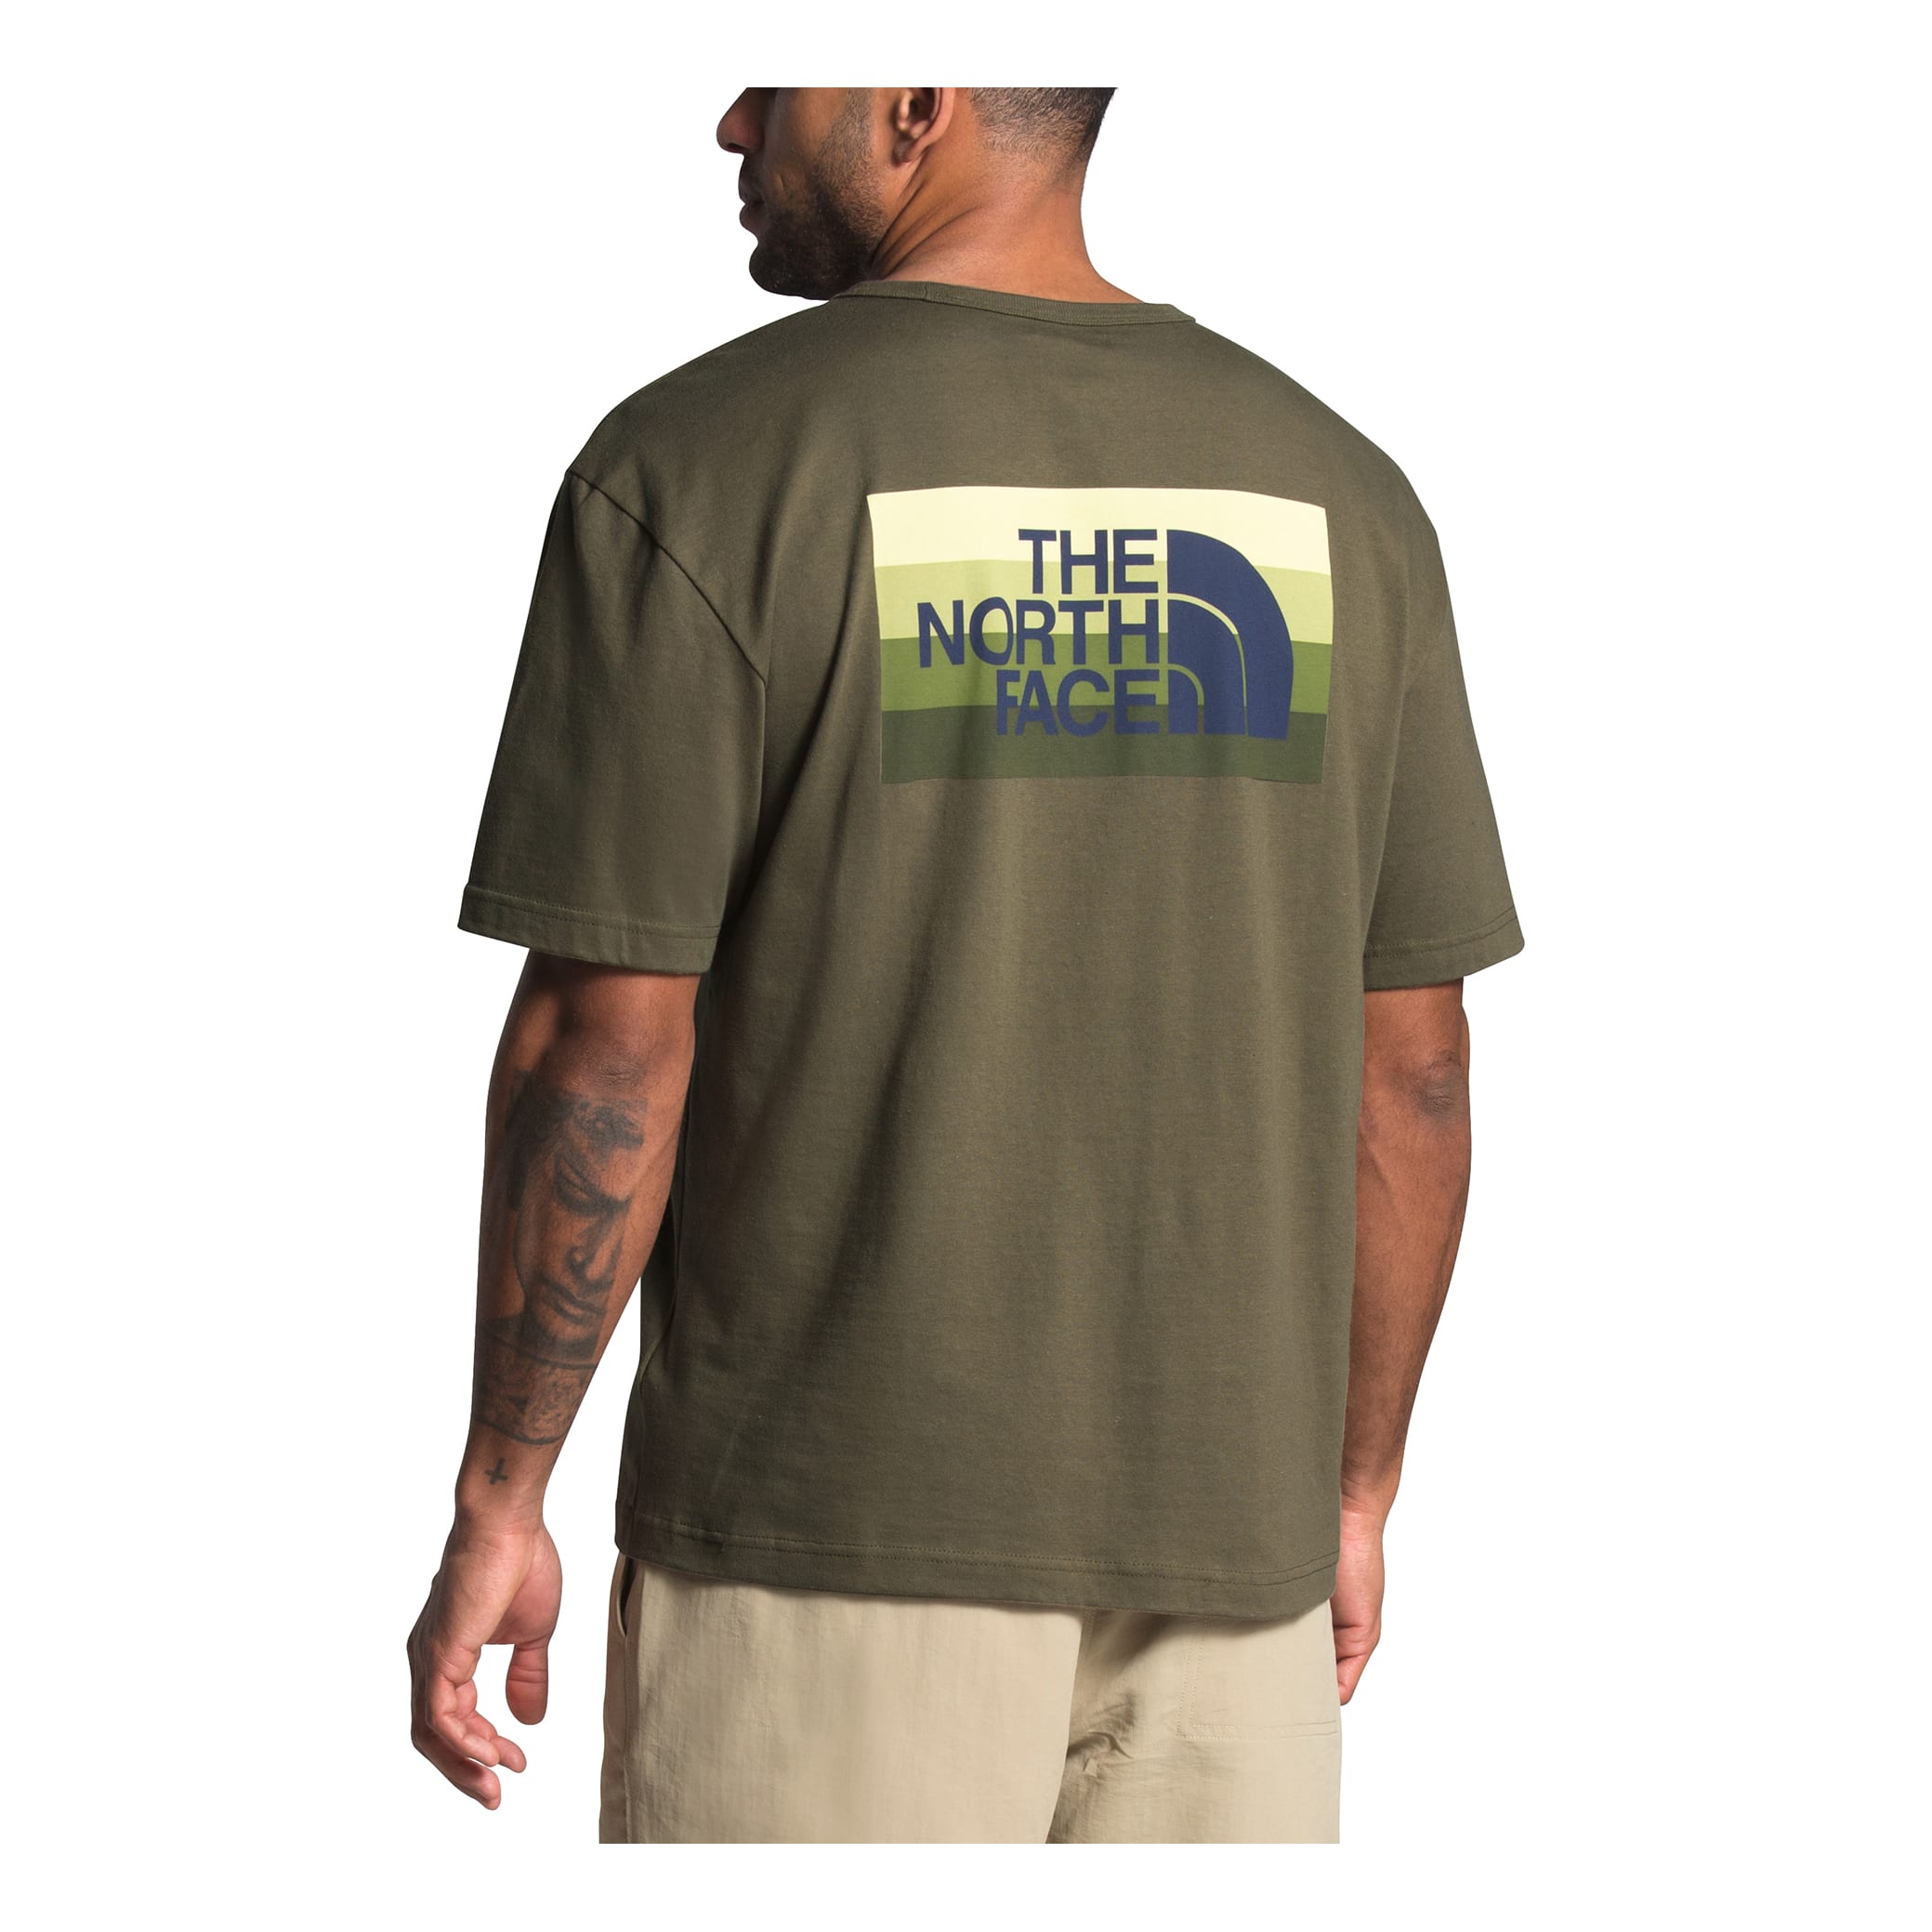 The North Face® Men’s Tonal Bars T-Shirt - Burnt Olive Green - back